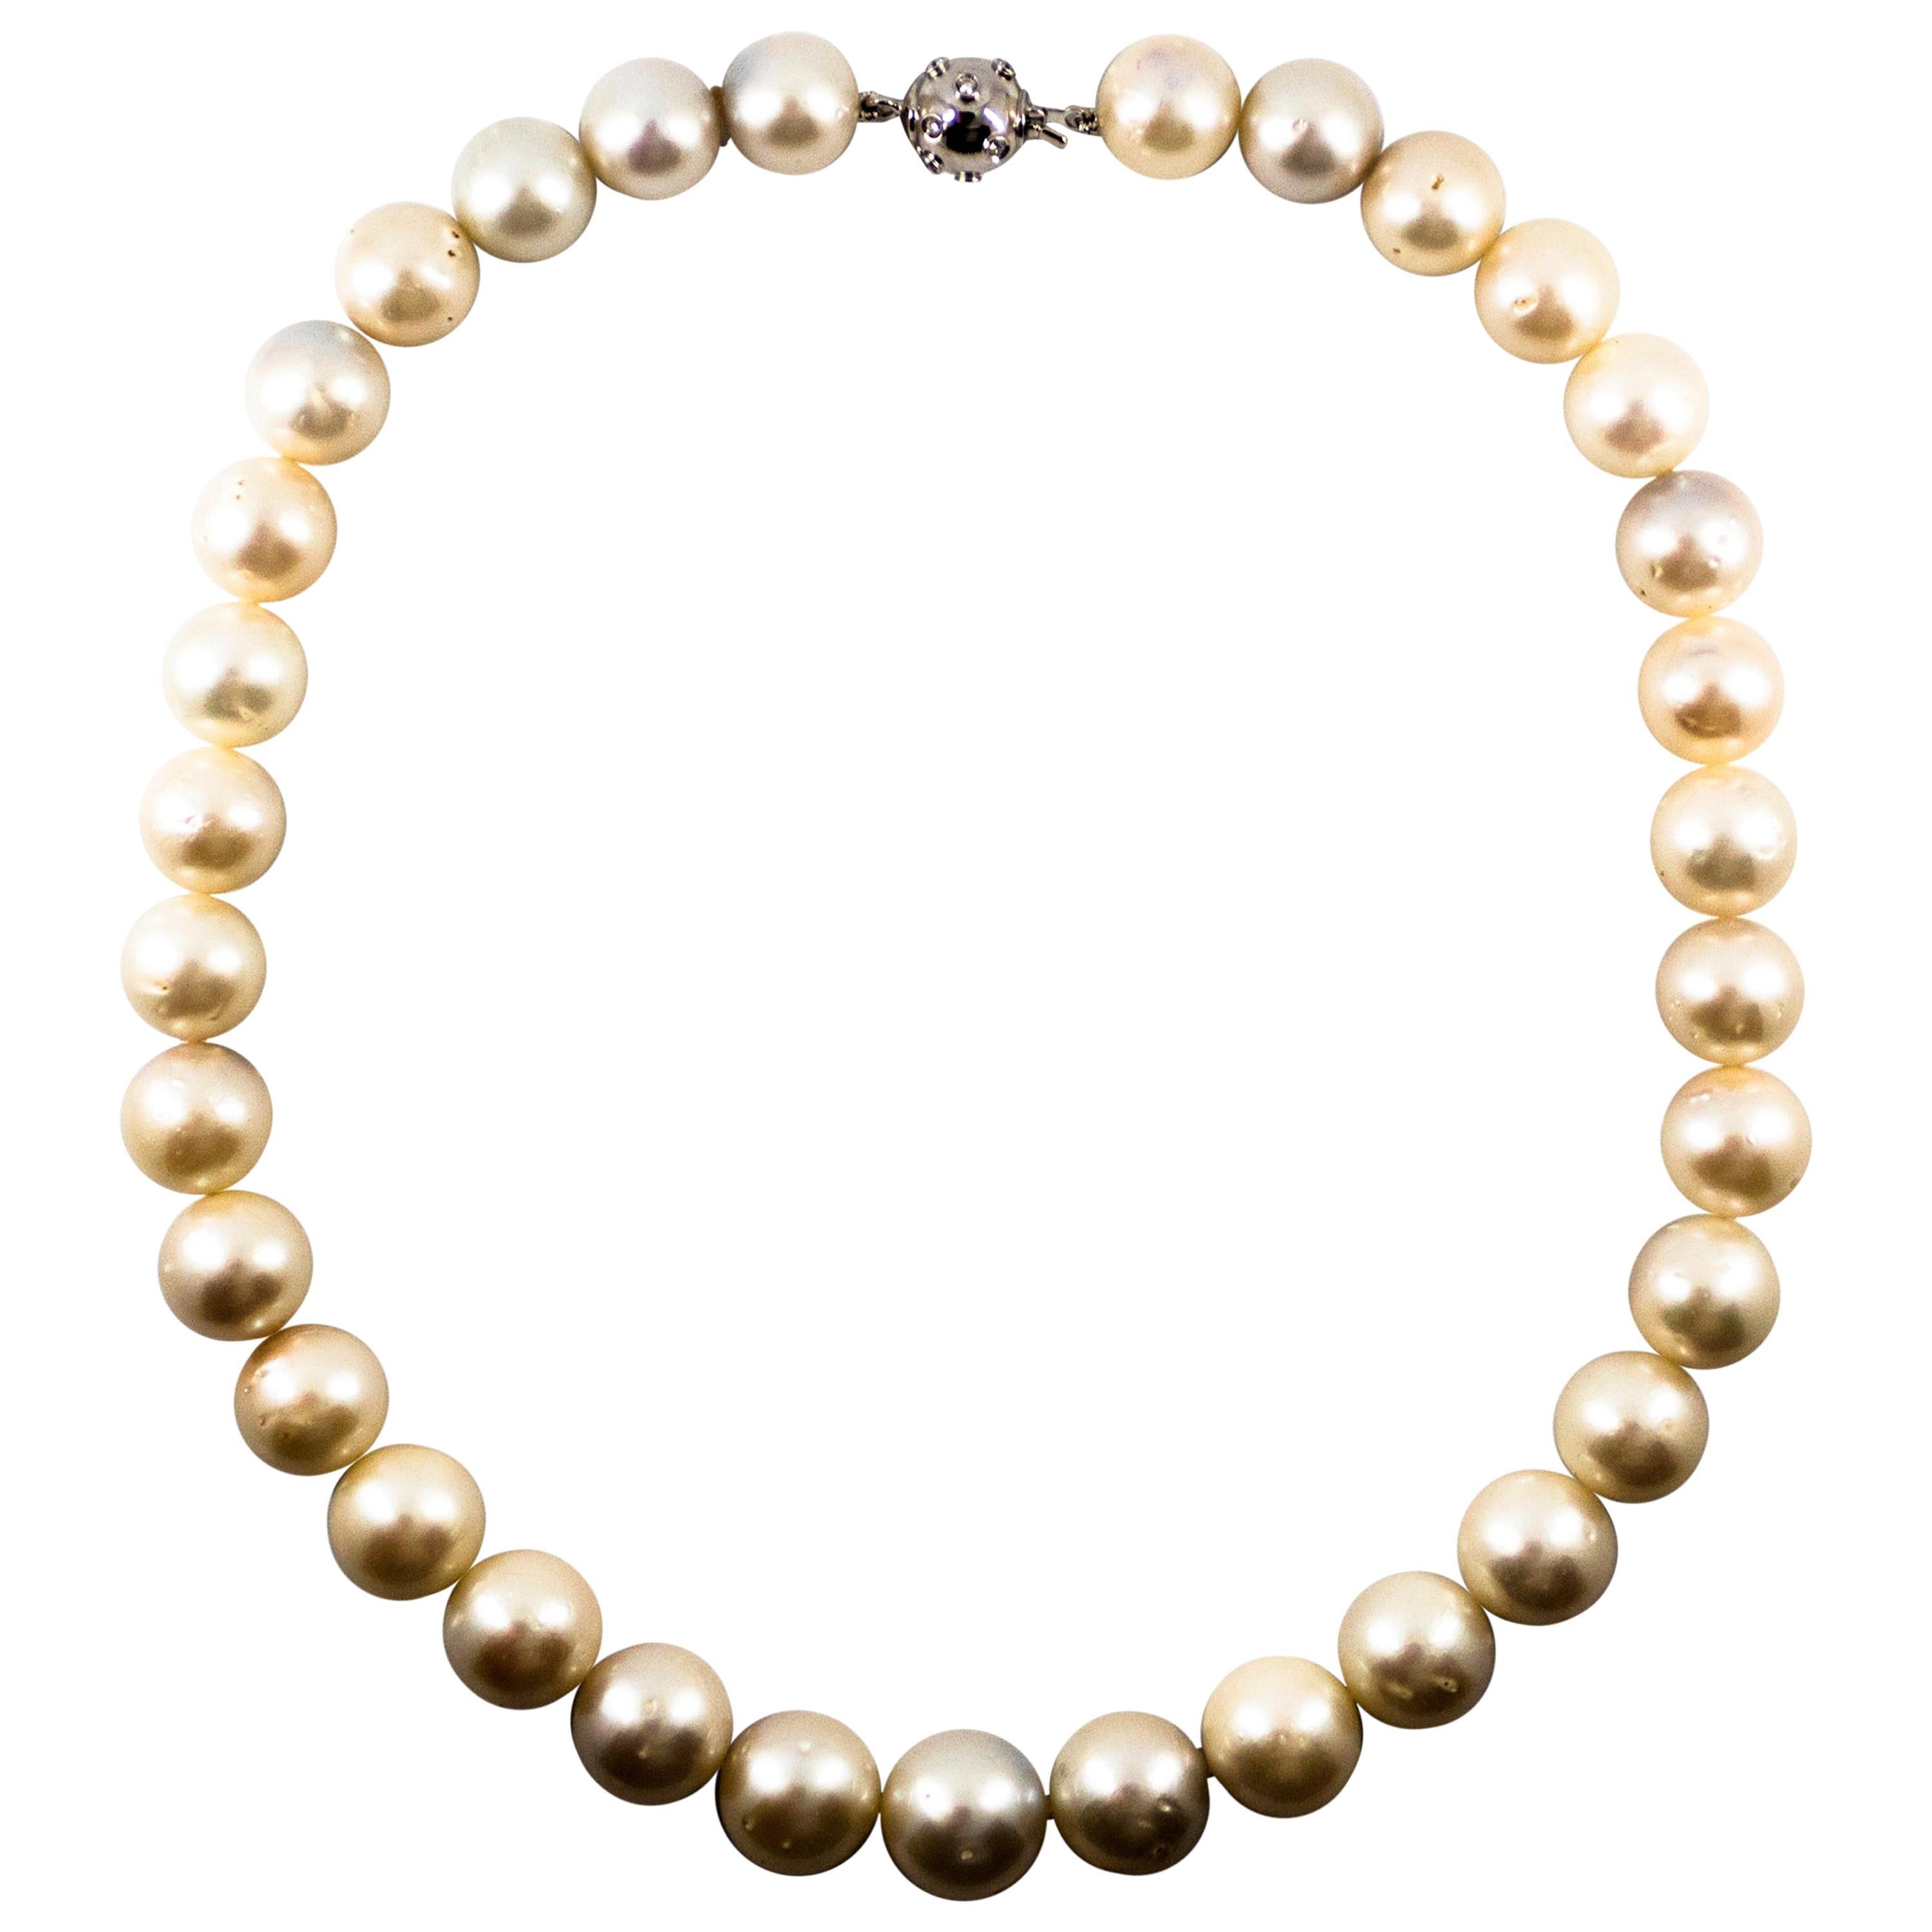 0.28 Carat White Diamond 510.0 Carat Australian Pearl Beaded Necklace or blanc